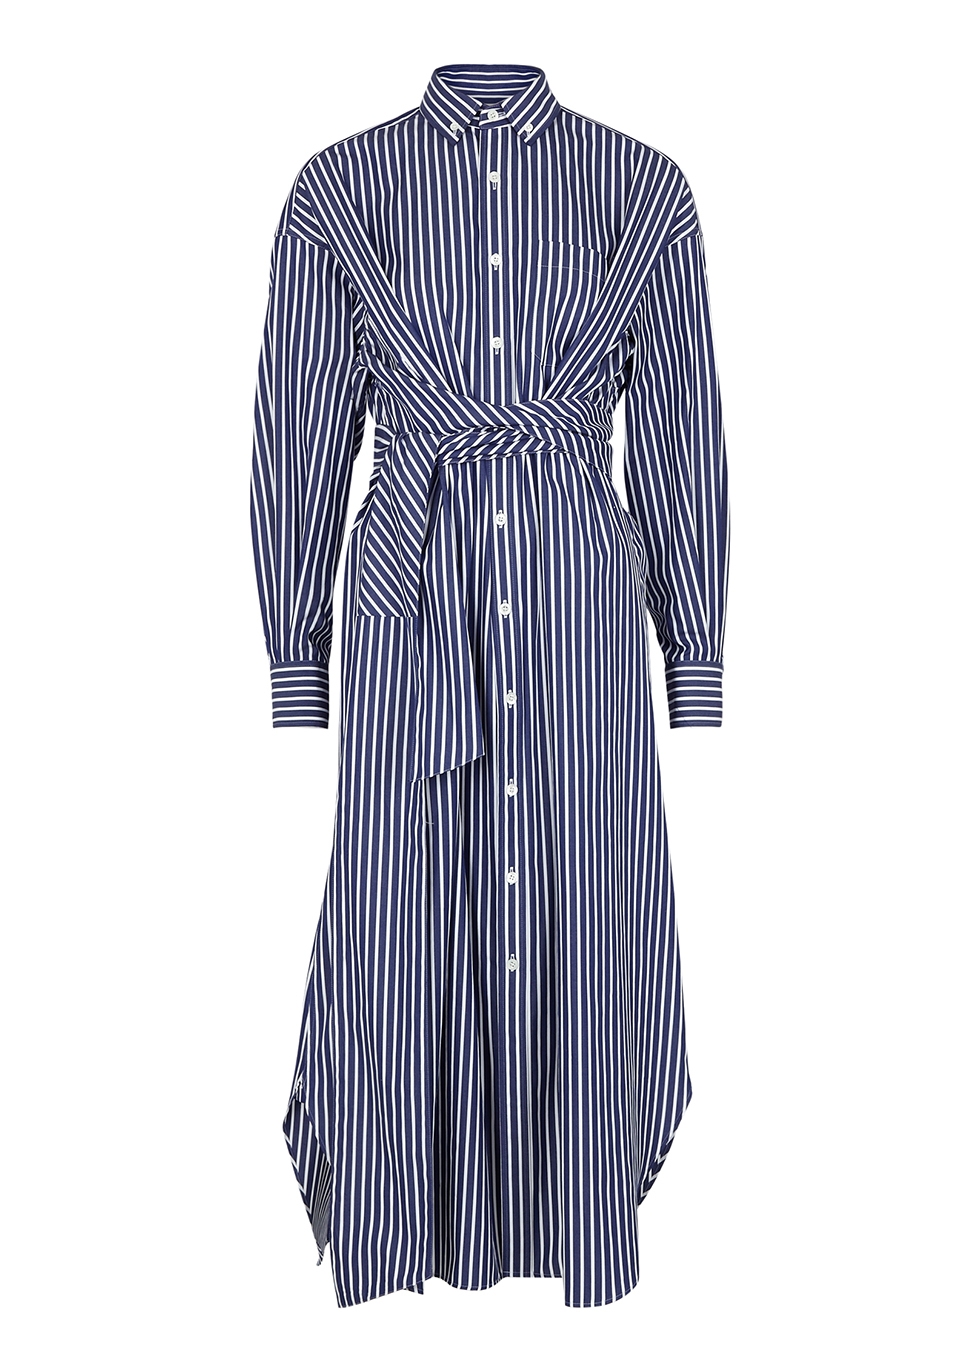 HYKE Navy striped cotton shirt dress - Harvey Nichols